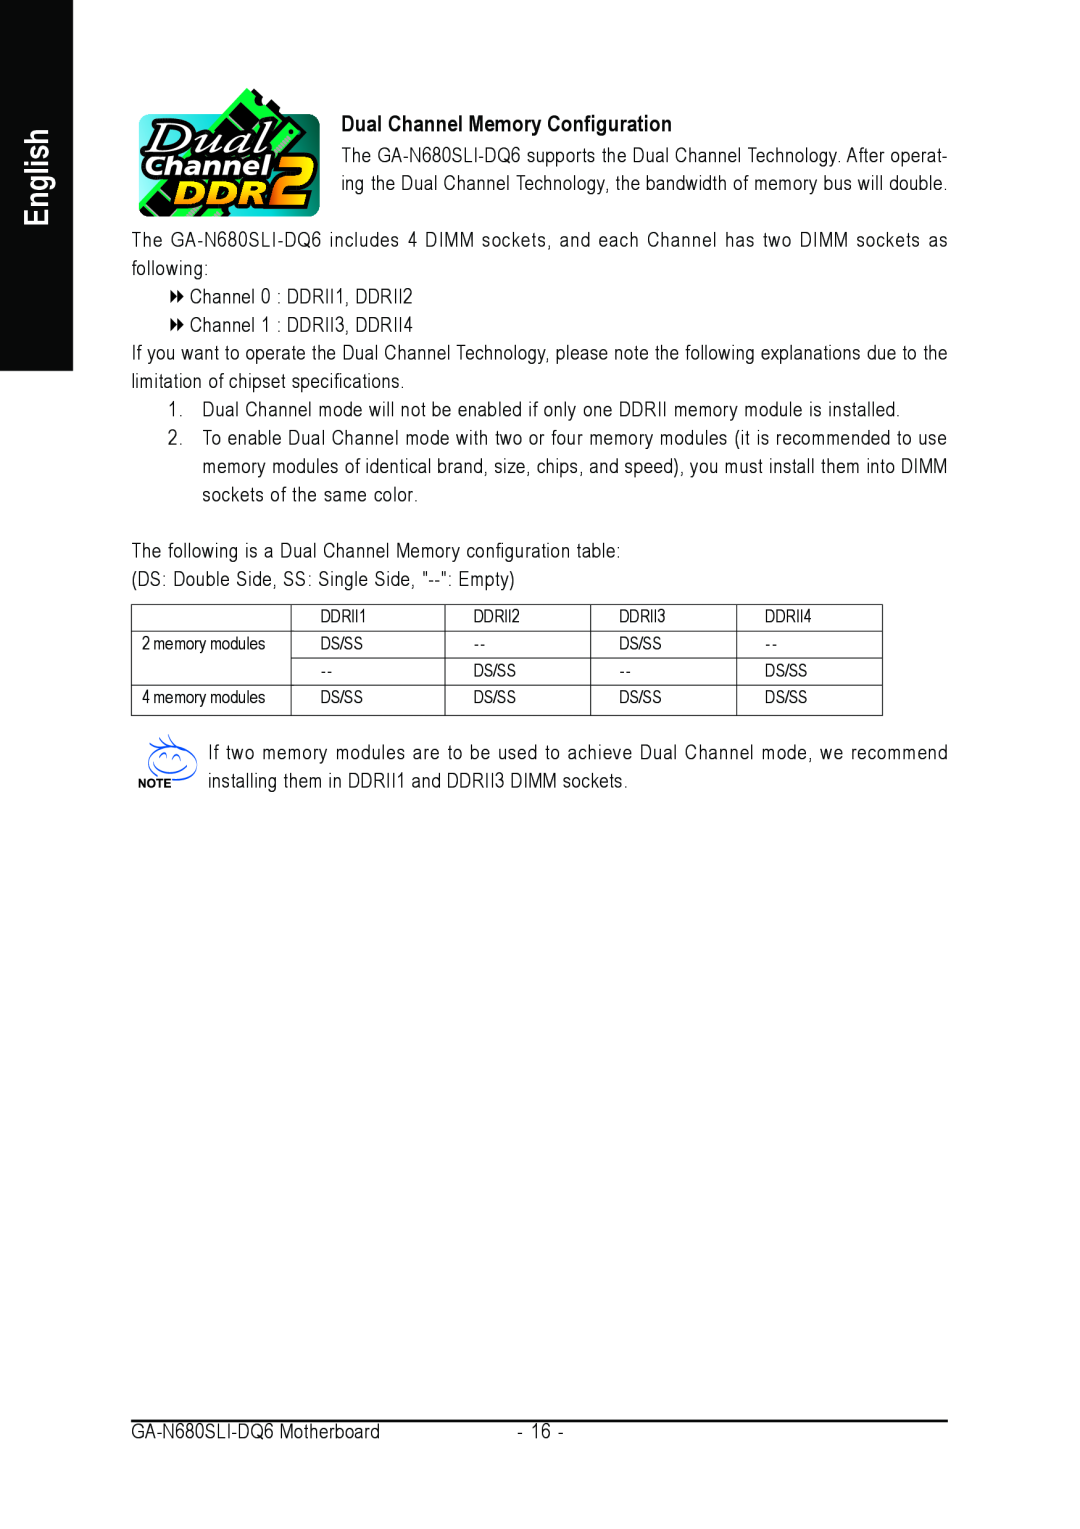 Intel GA-N680SLI-DQ6 user manual Dual Channel Memory Configuration, English, memory modules 